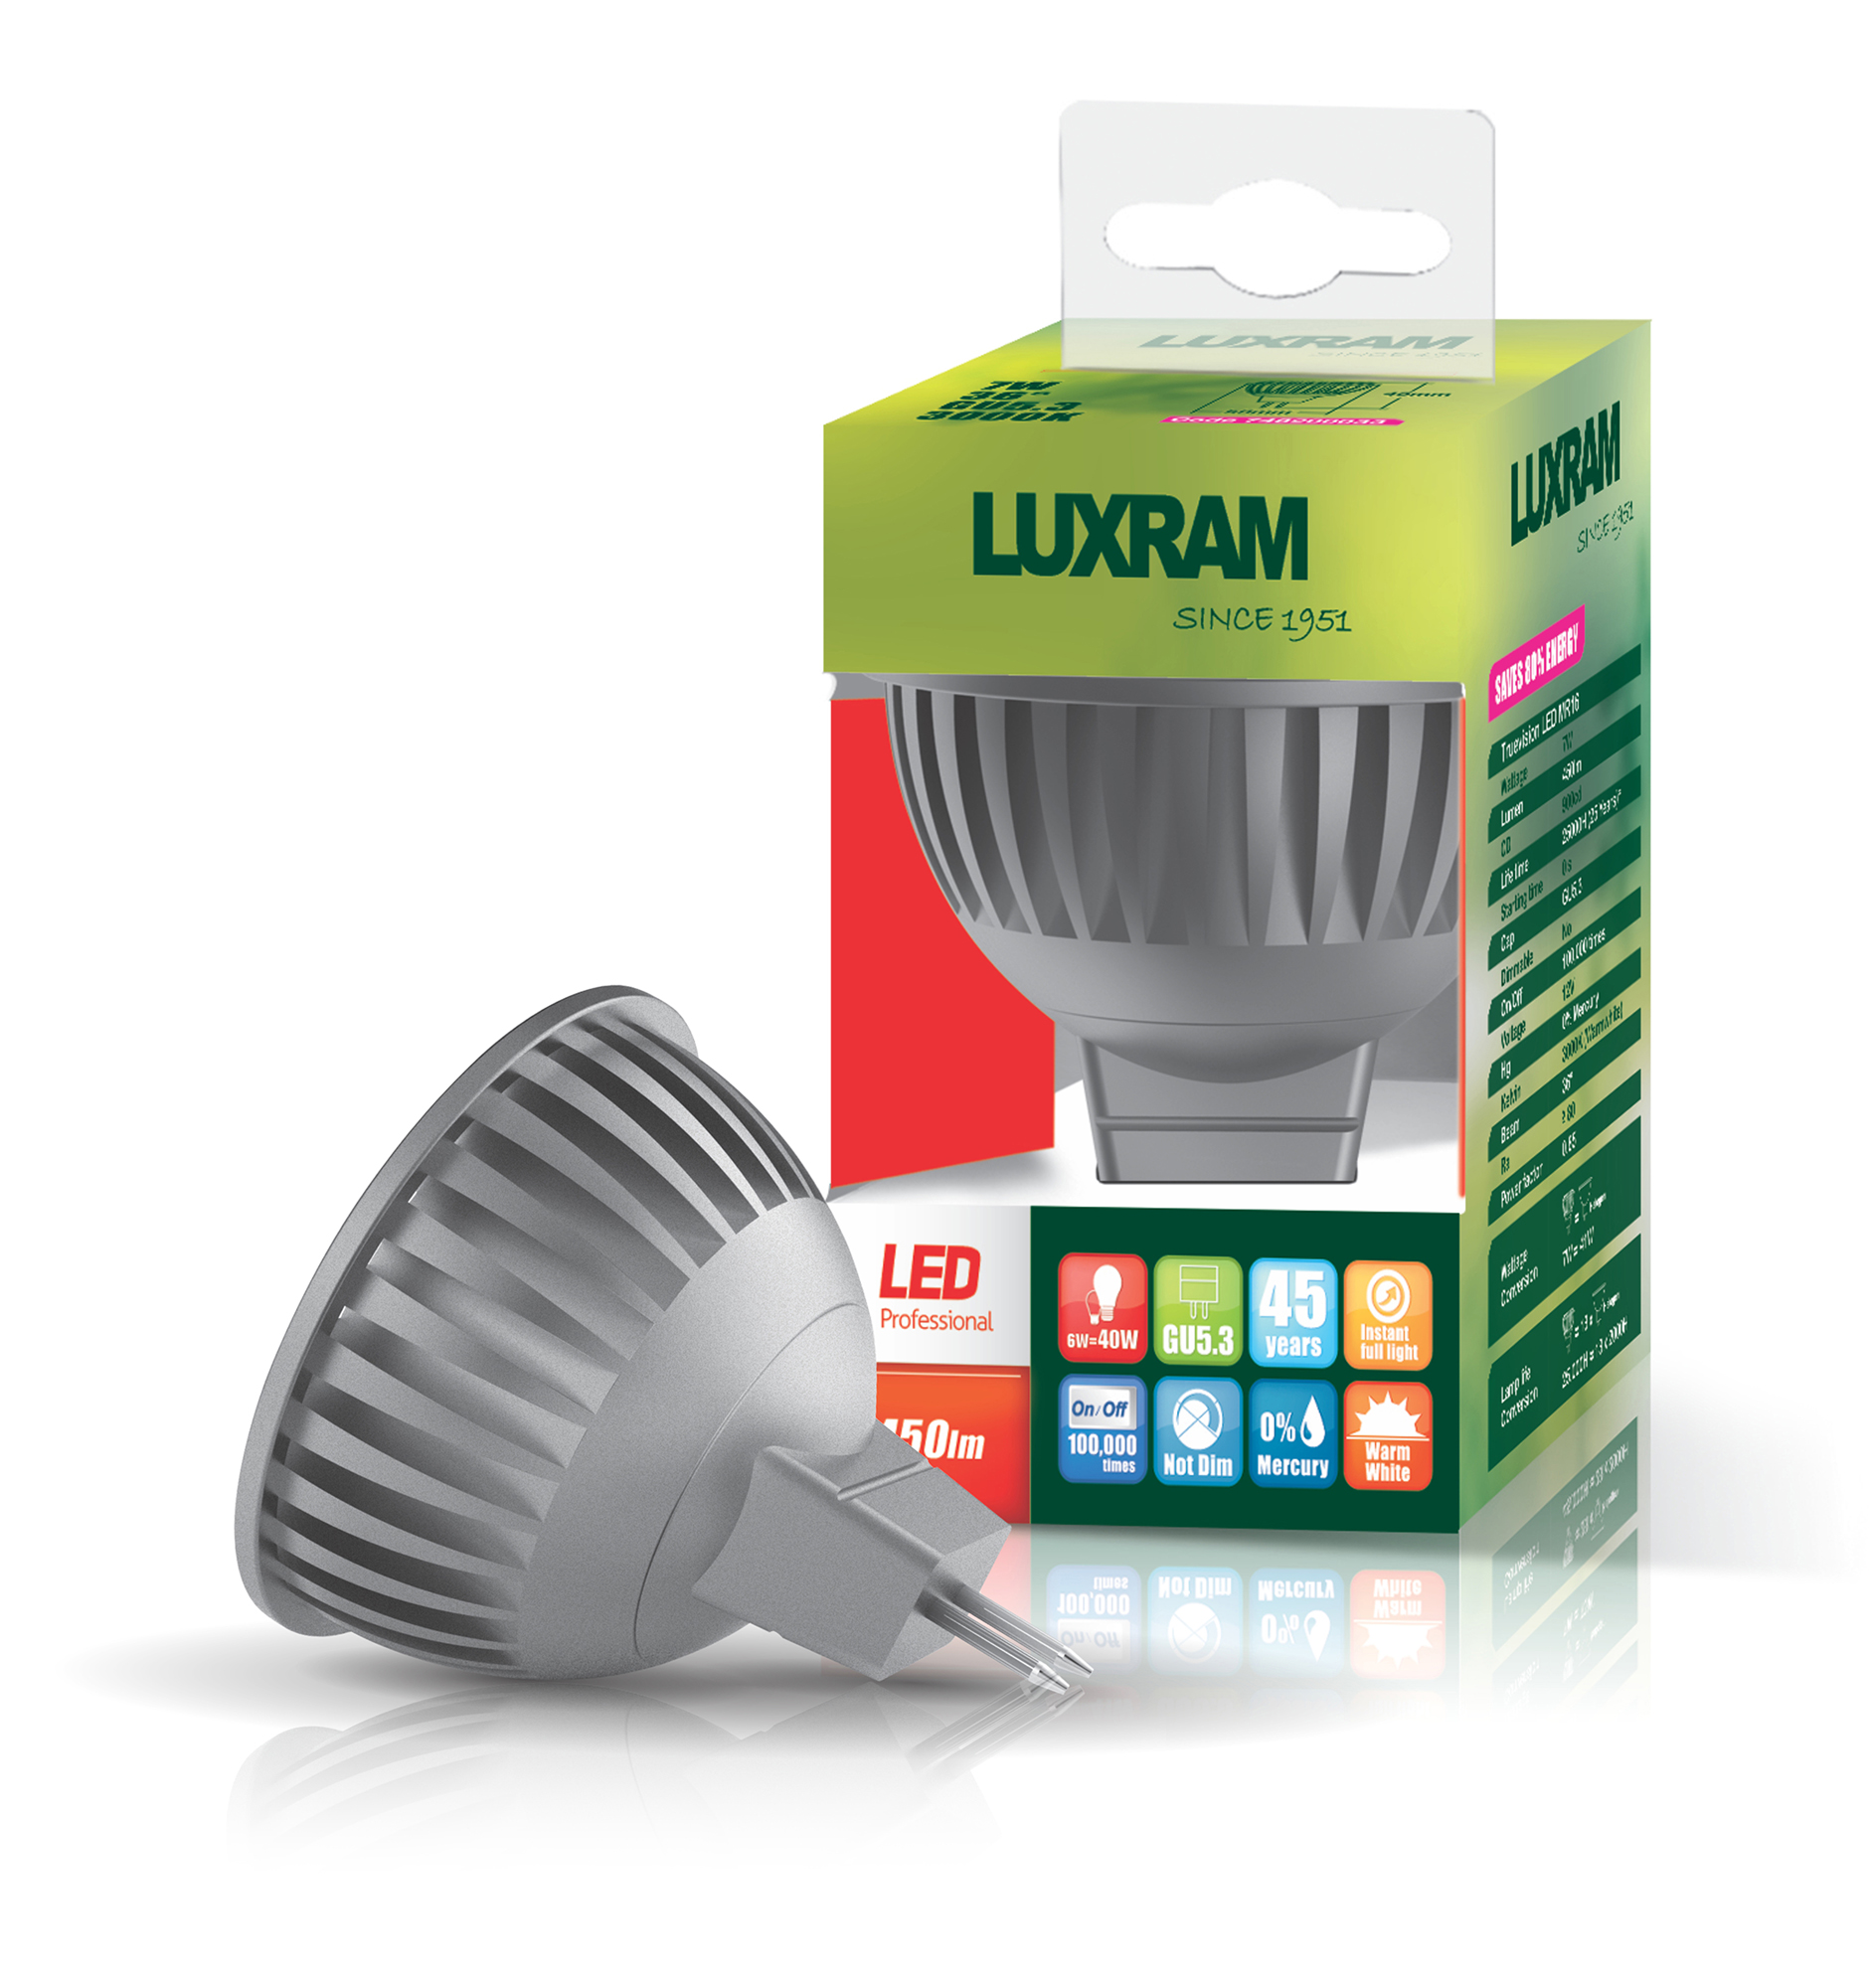 Truevision LED Lamps Luxram Spot Lamps